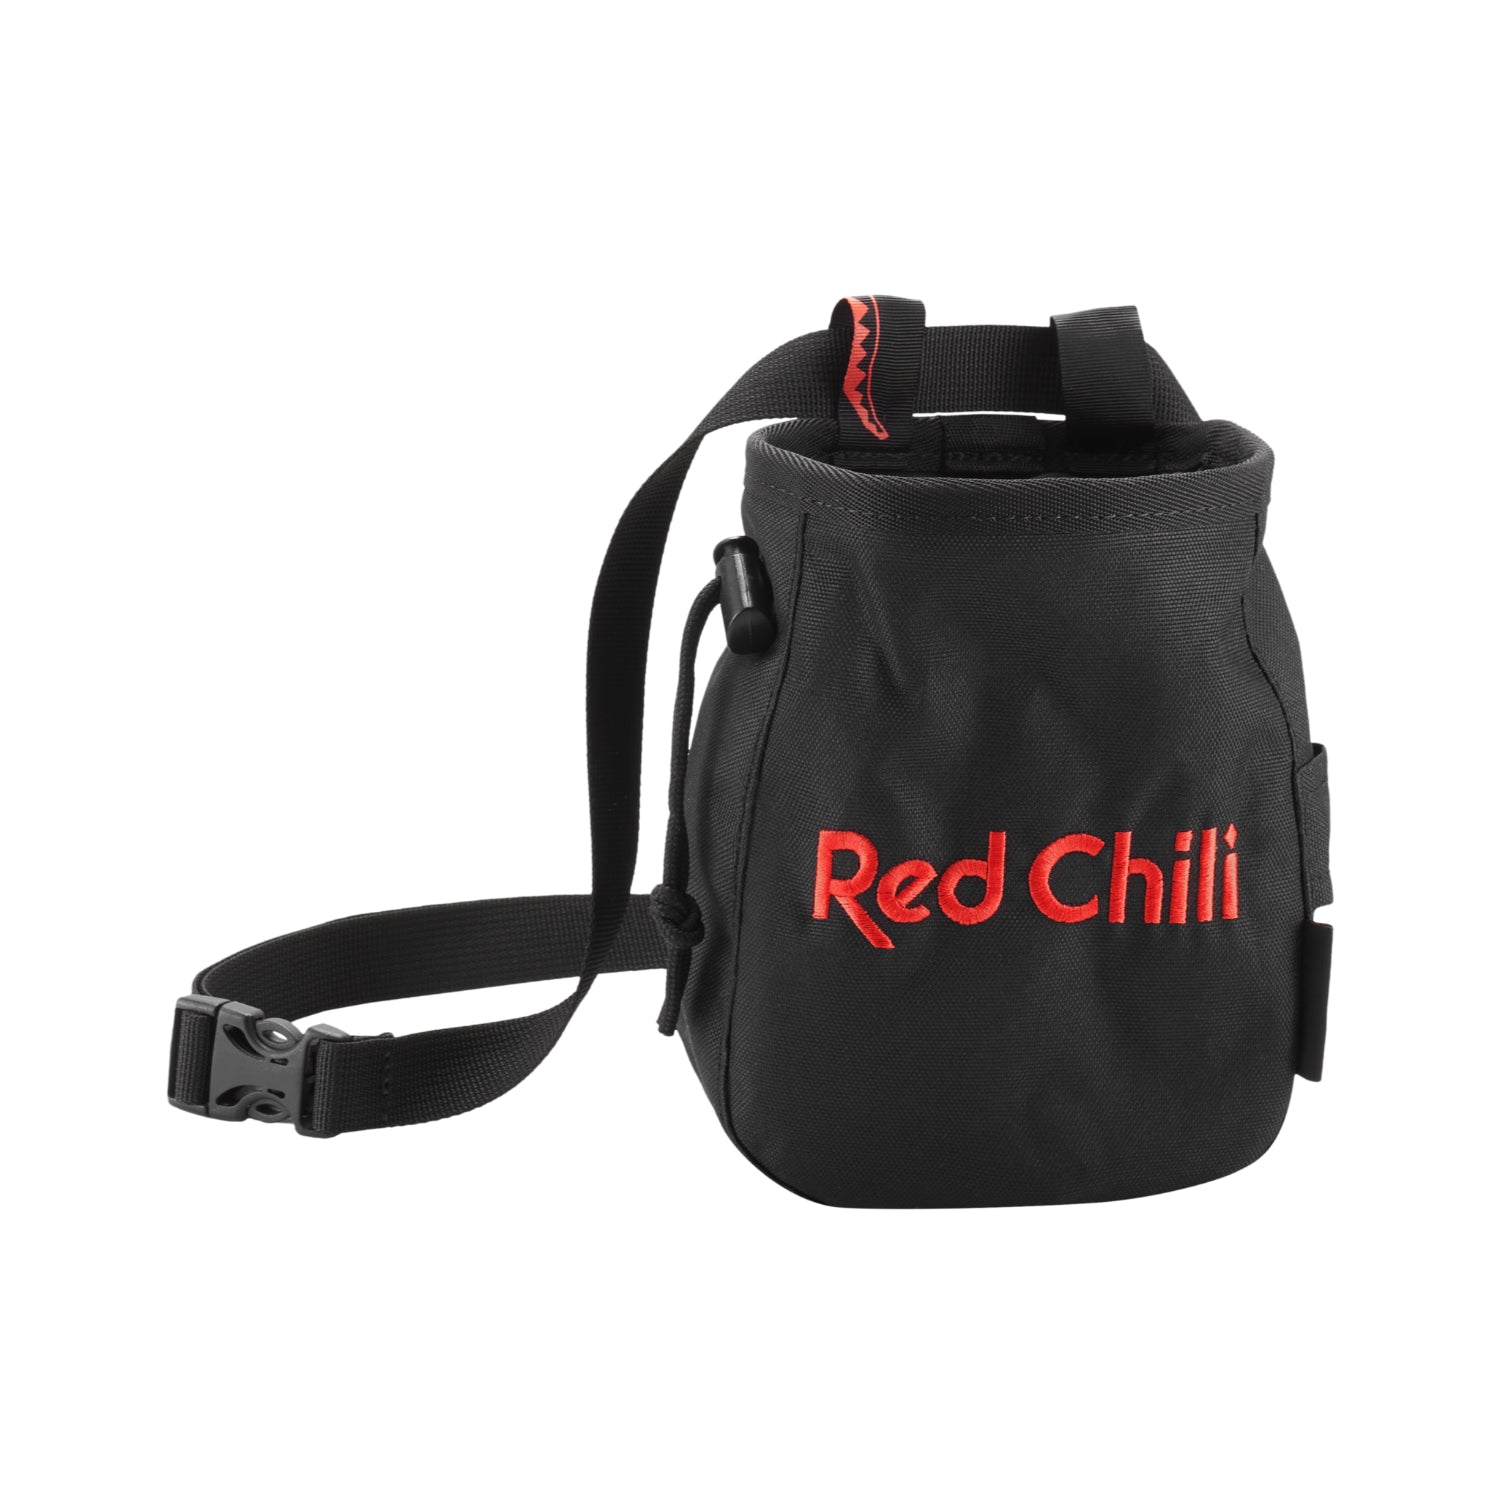 Red Chili Giant Chalk Bag Black